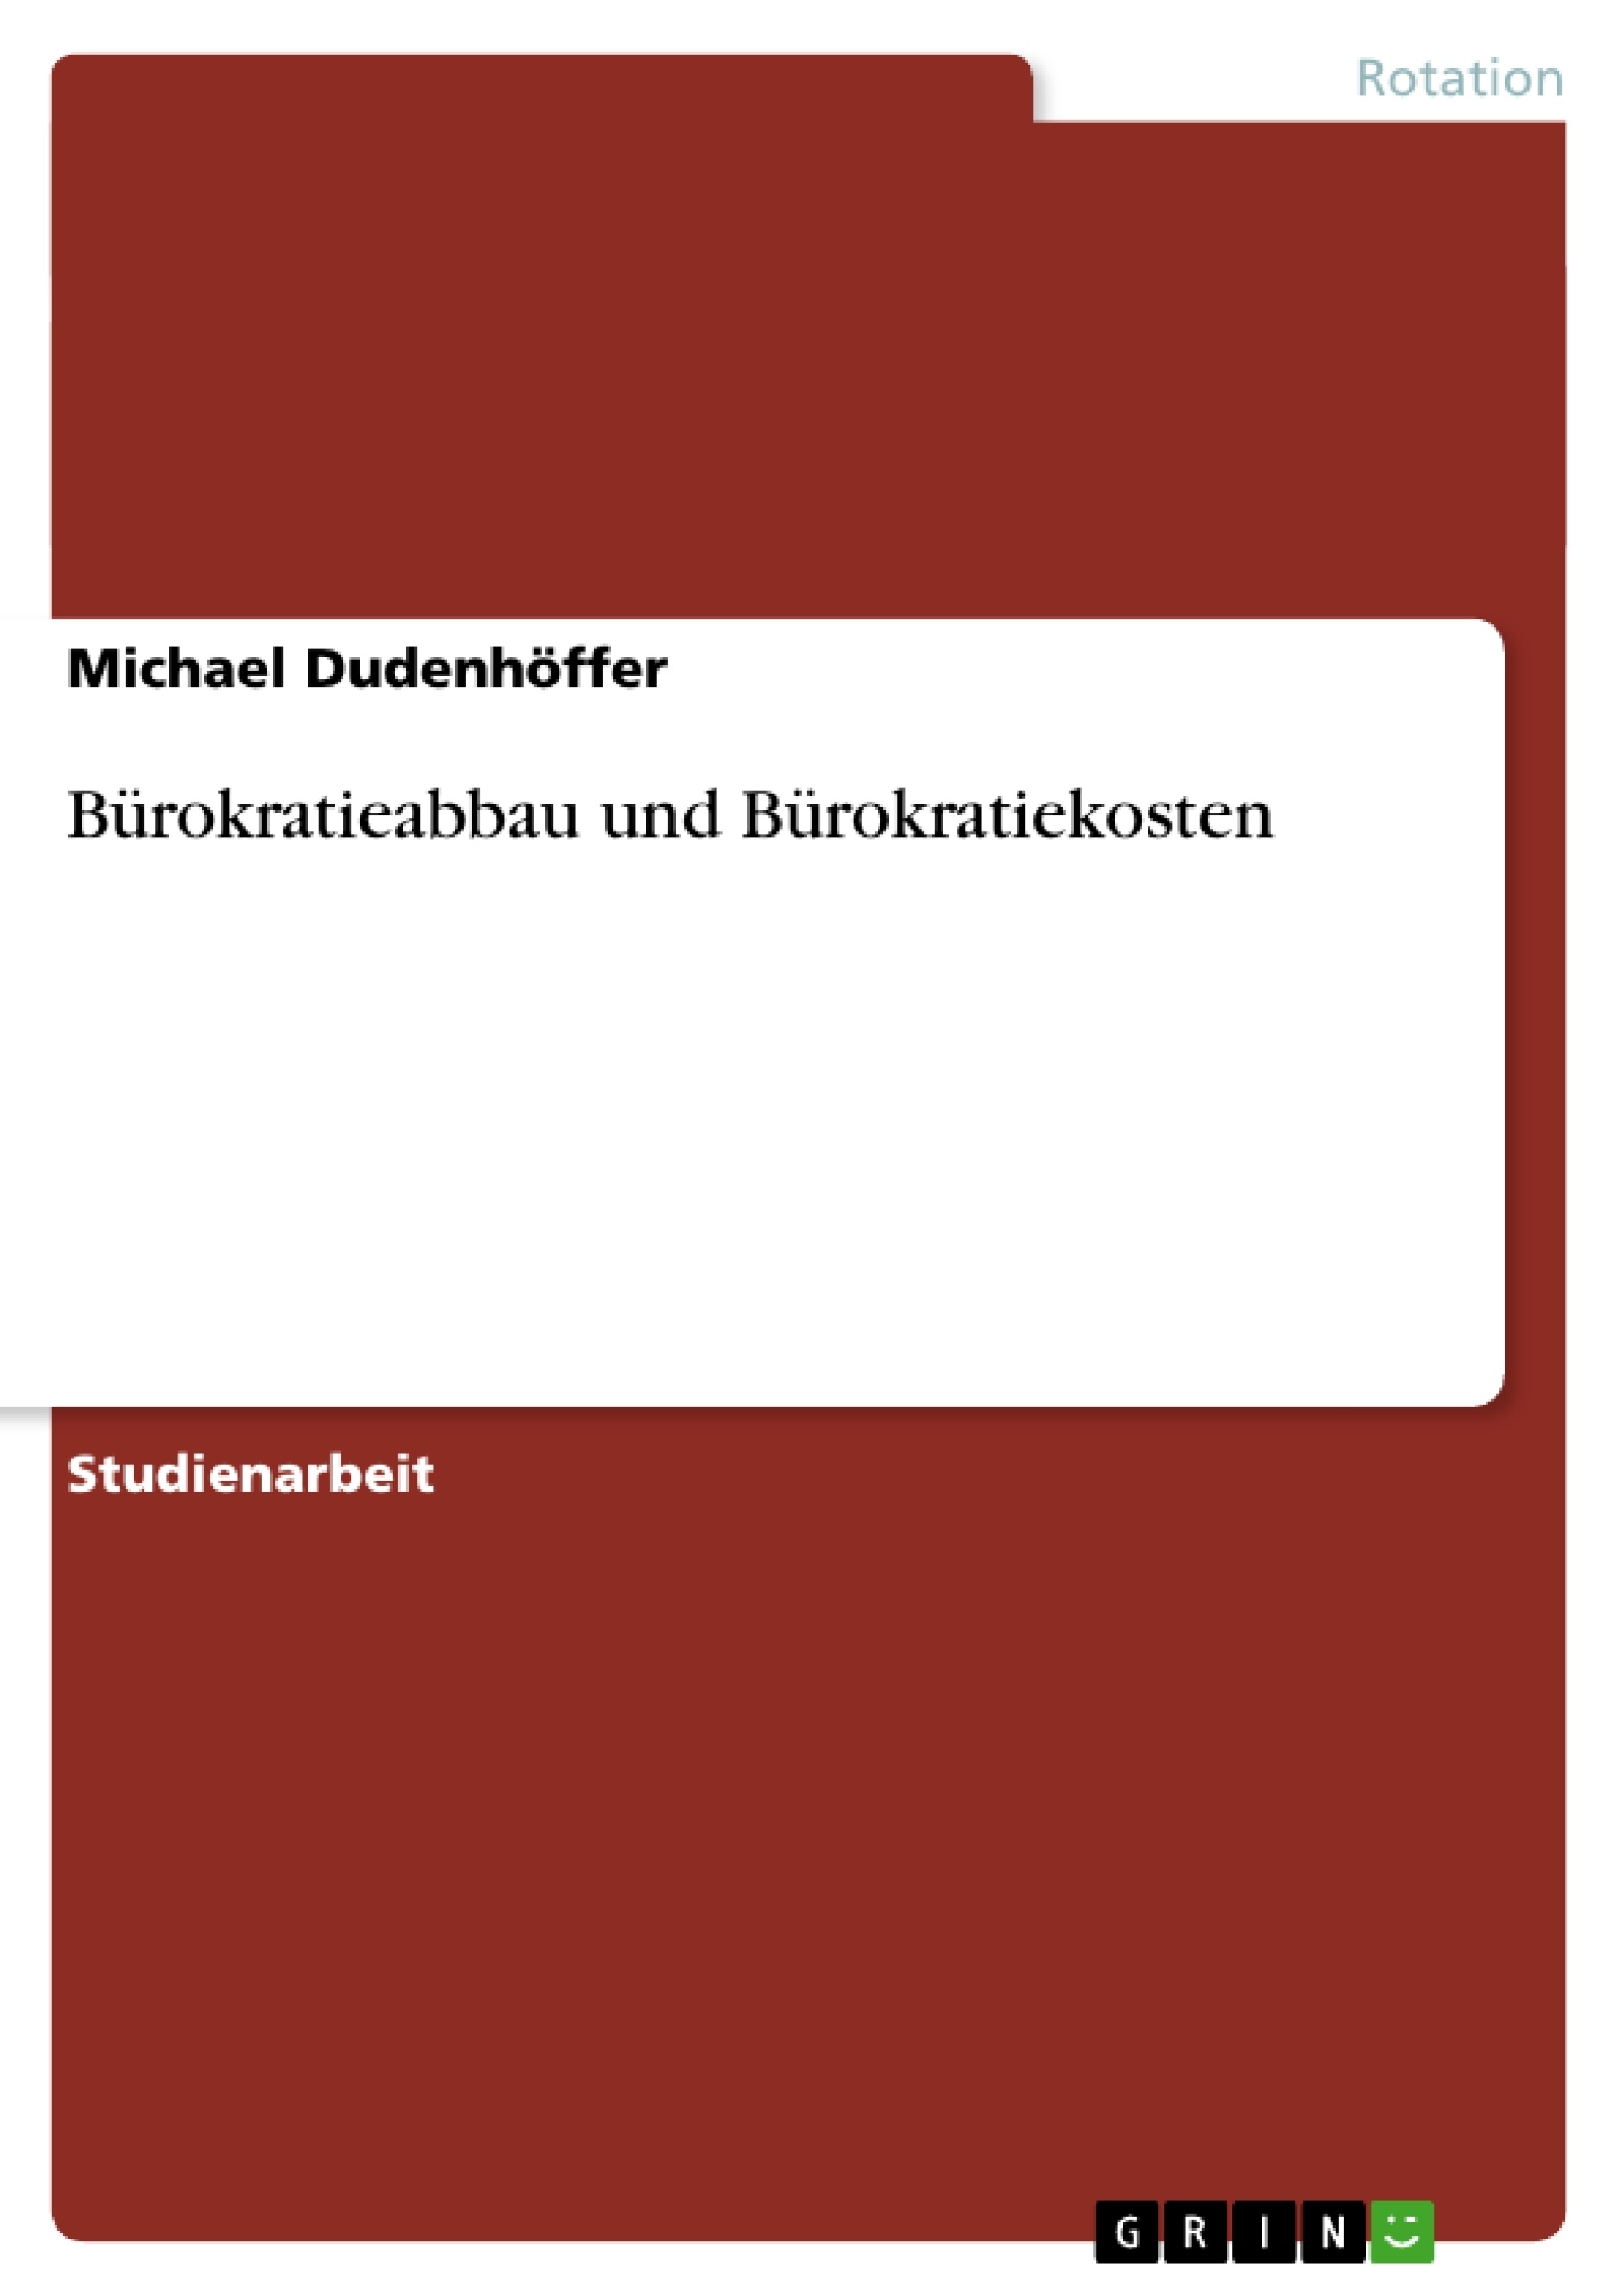 Título: Bürokratieabbau und Bürokratiekosten